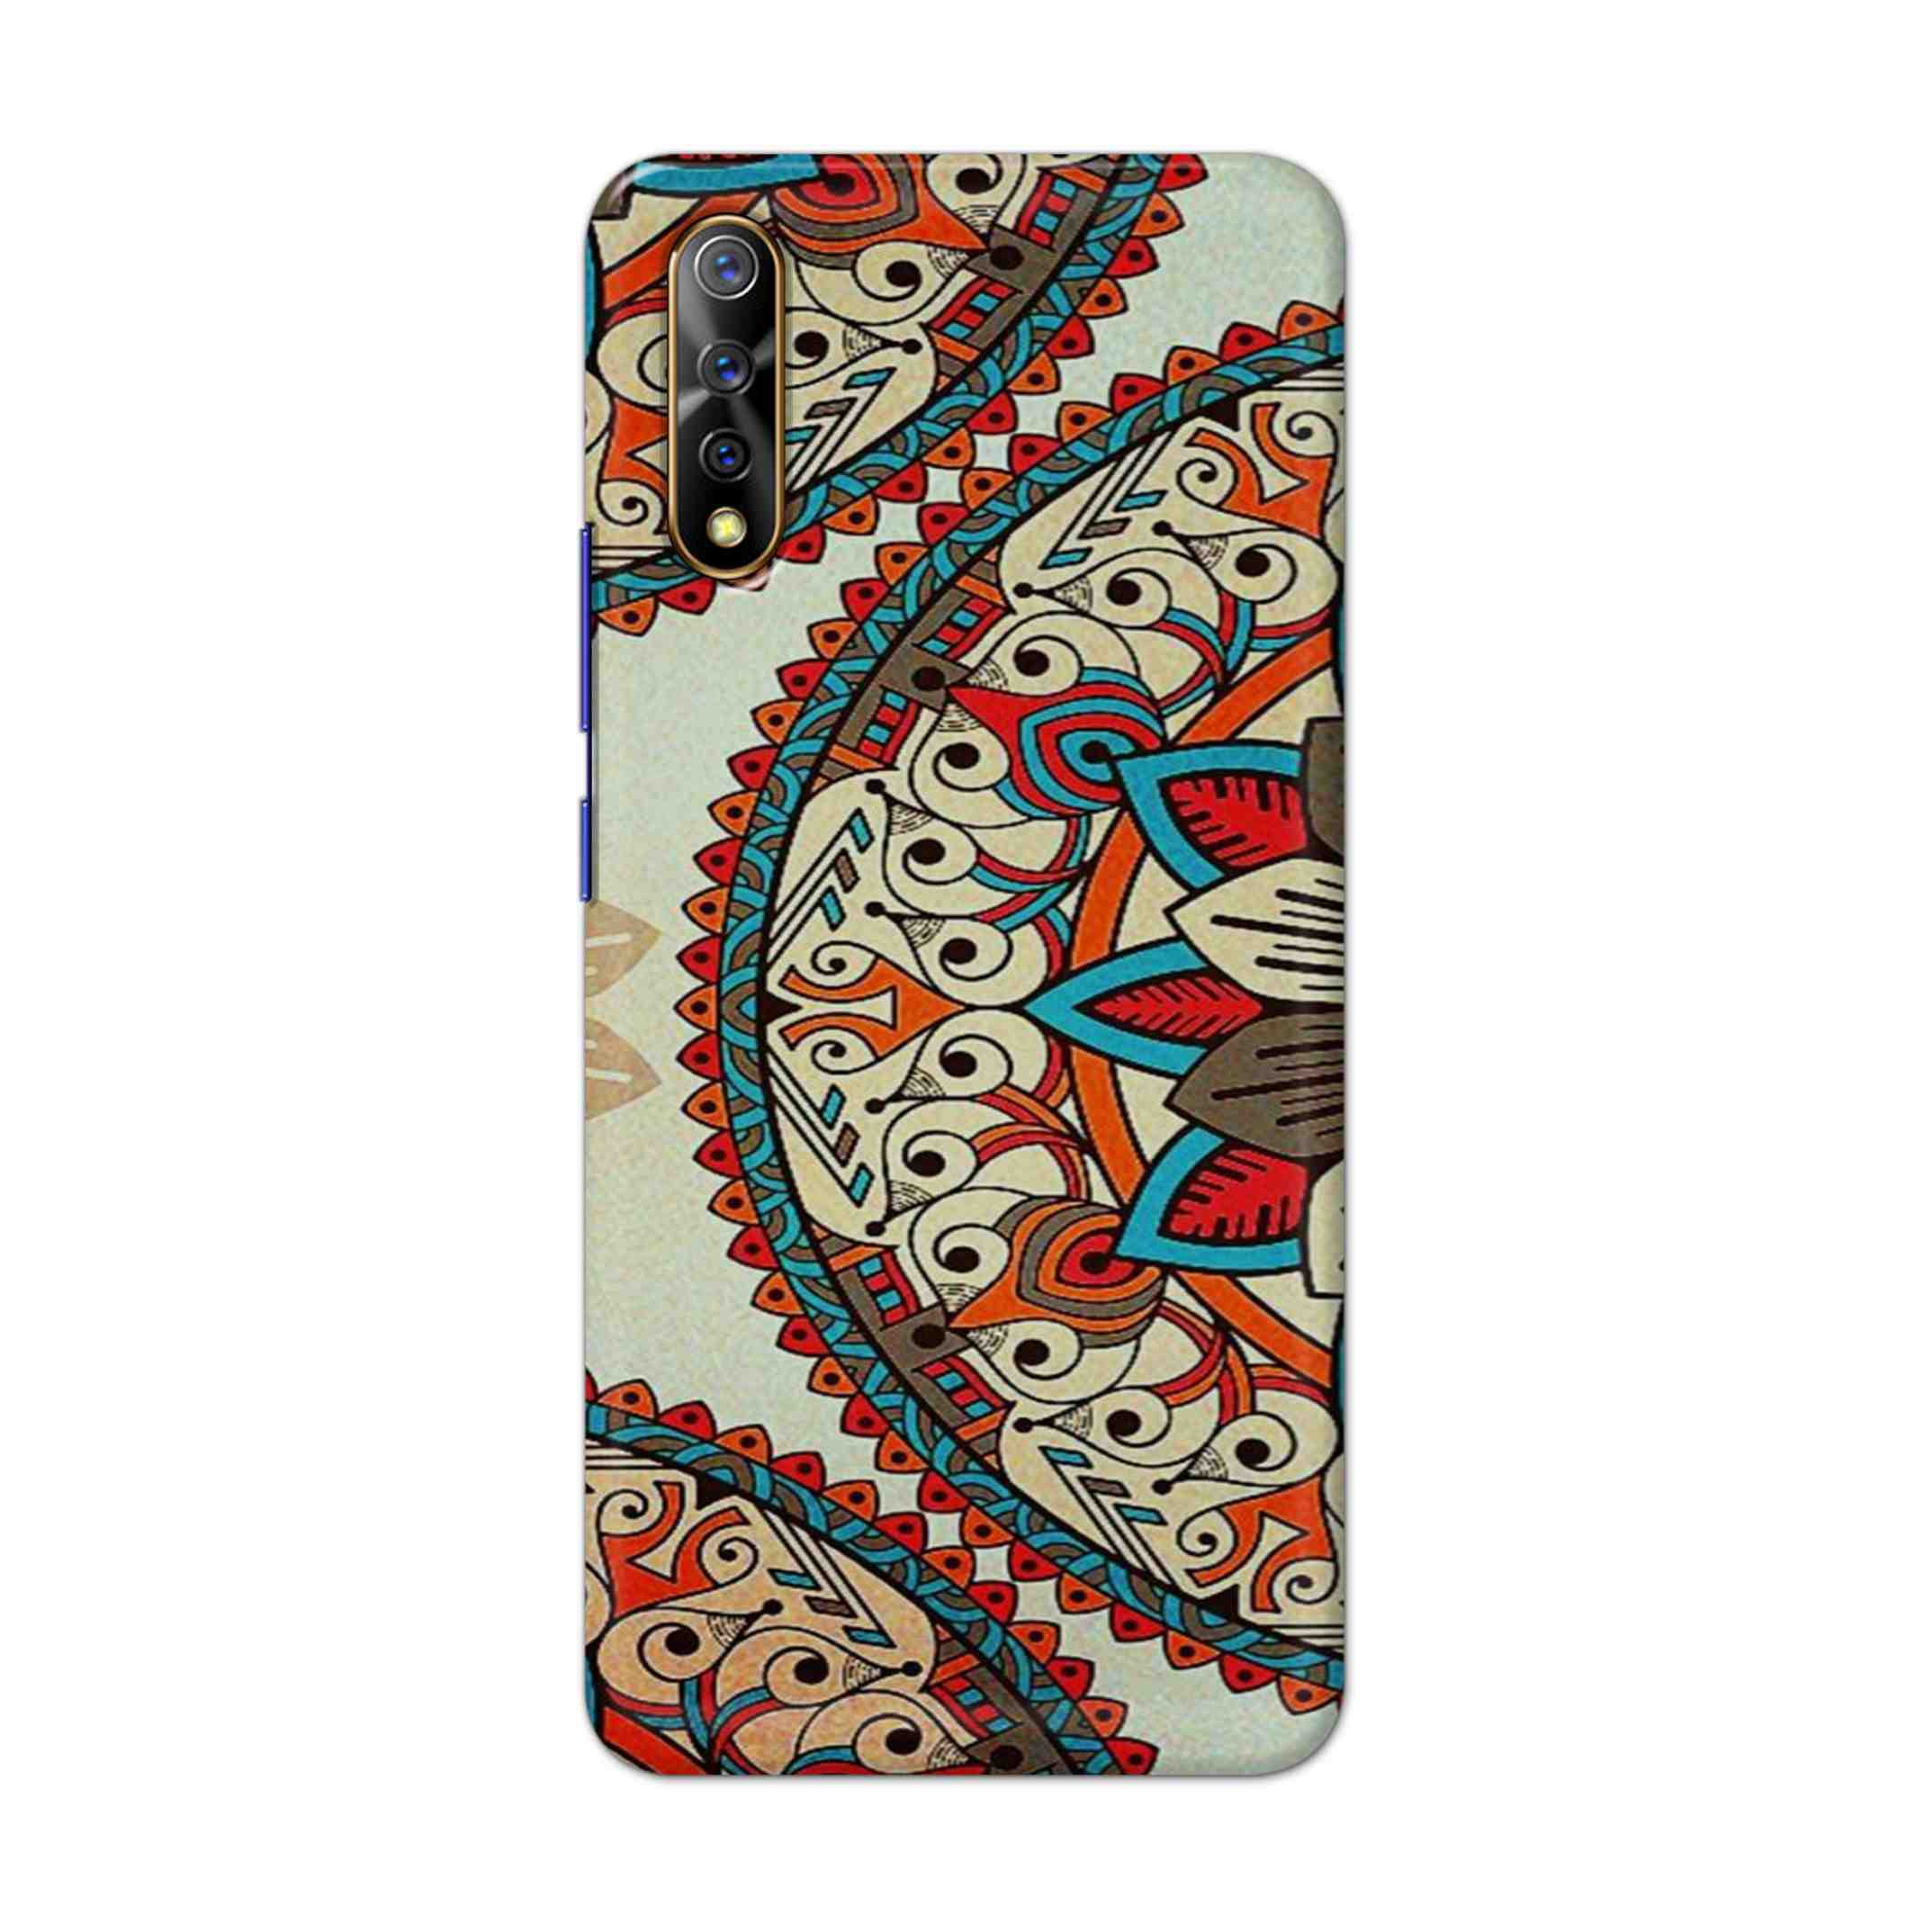 Buy Aztec Mandalas Hard Back Mobile Phone Case Cover For Vivo S1 / Z1x Online